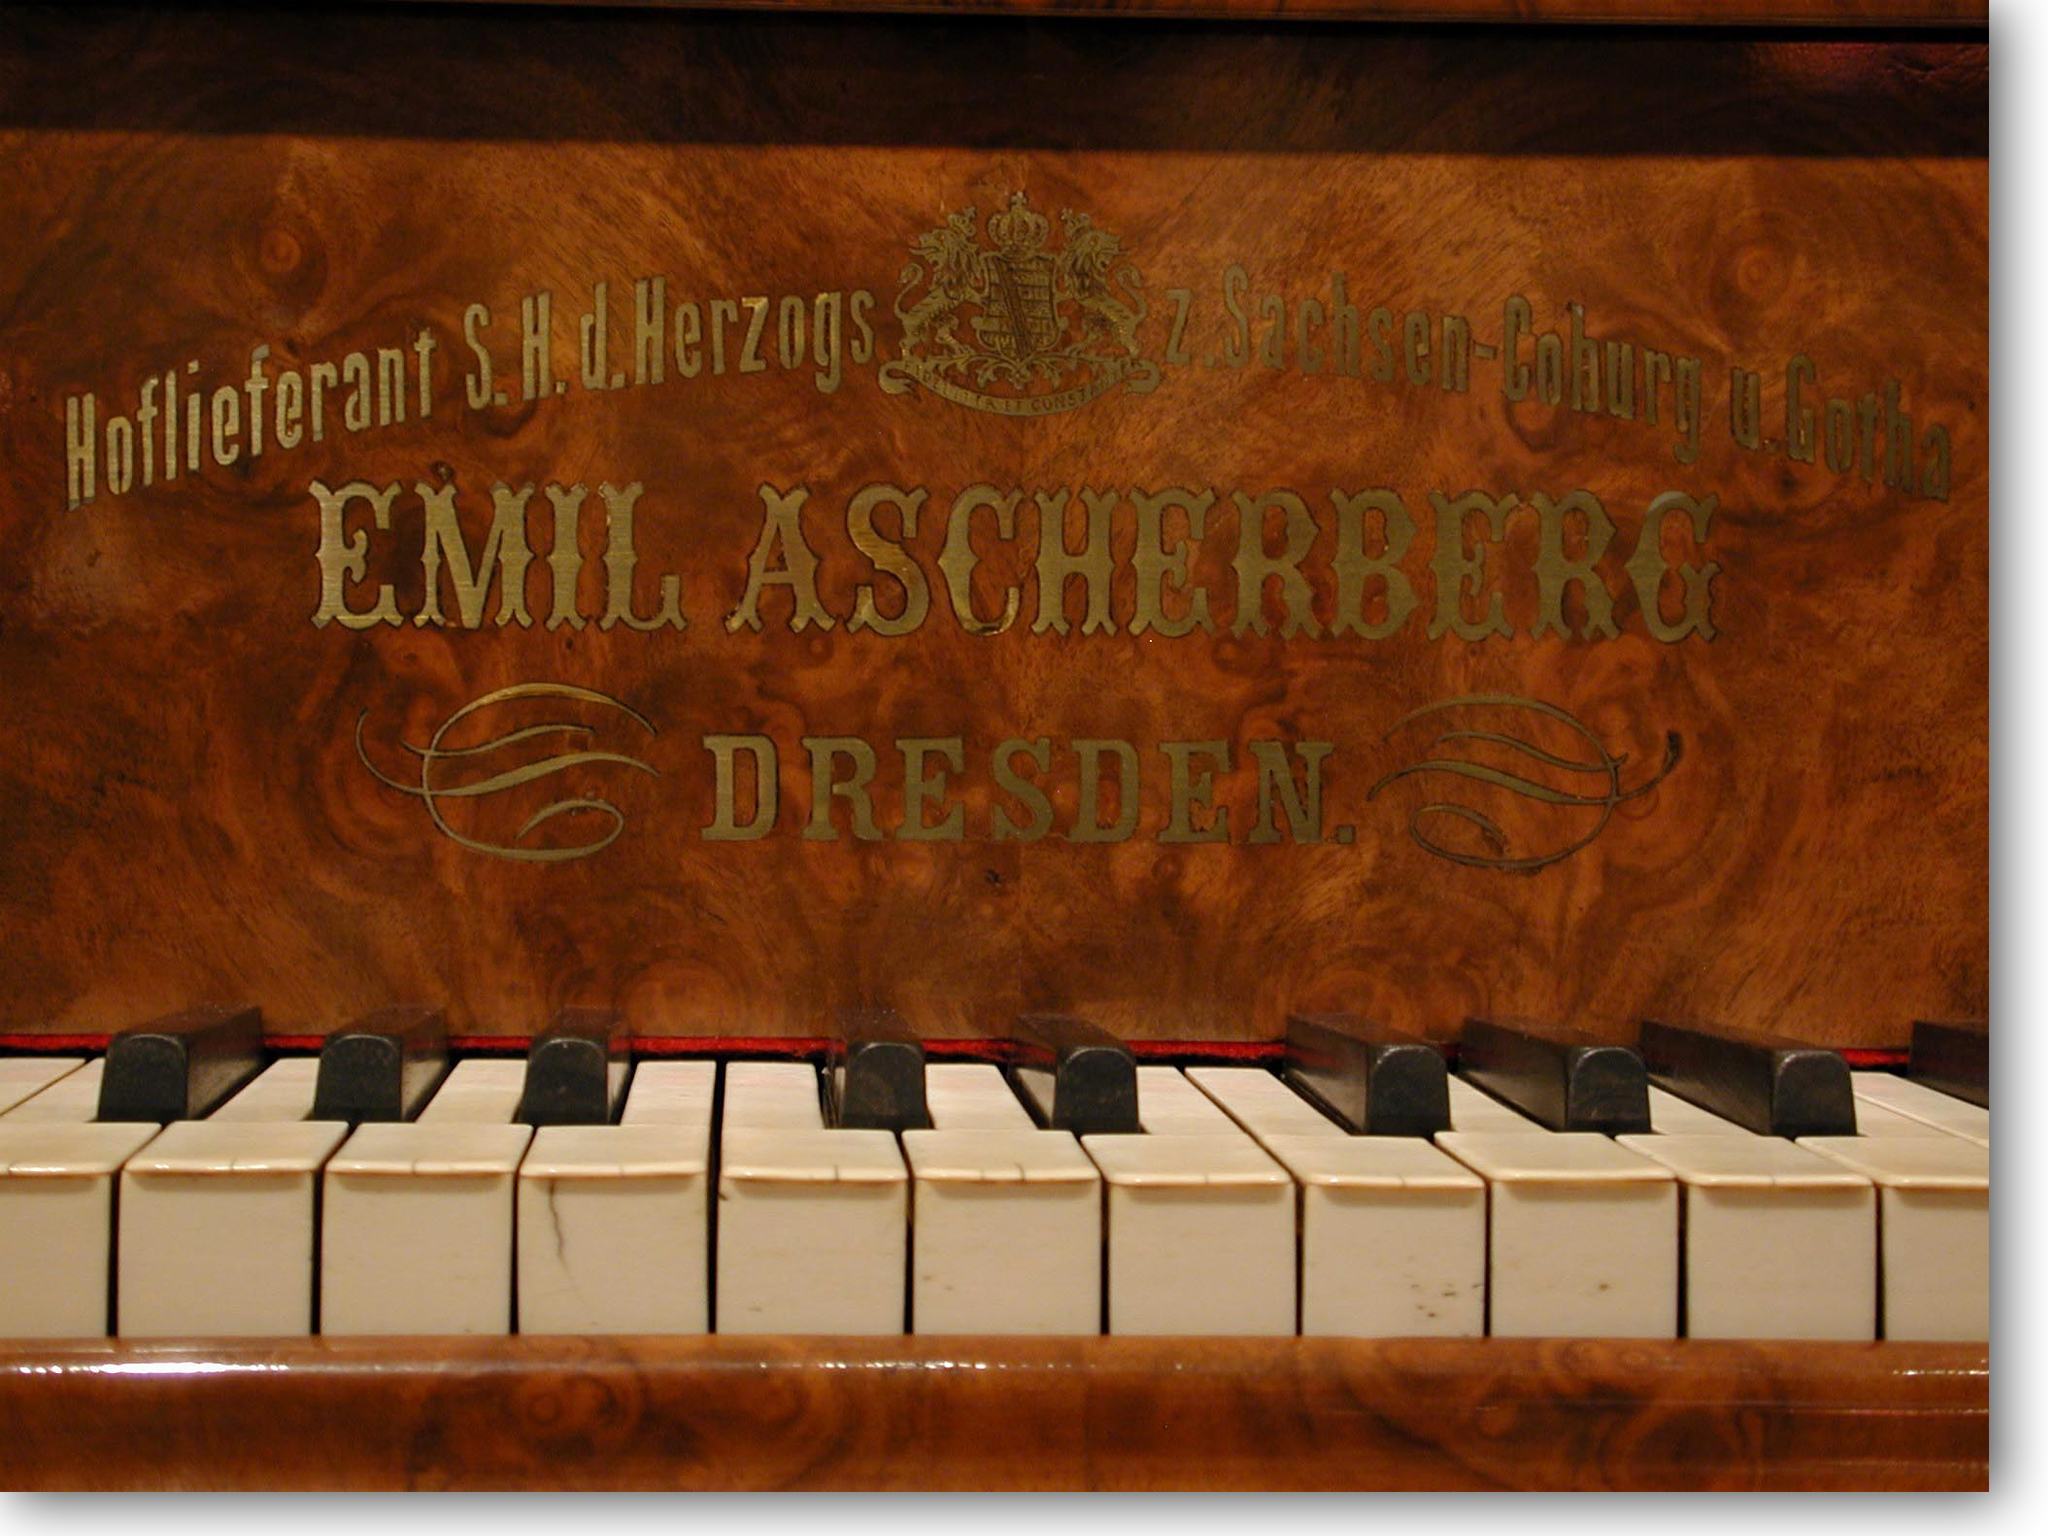 EMIL ASCHERBERG ANTIQUE GRAND PIANO